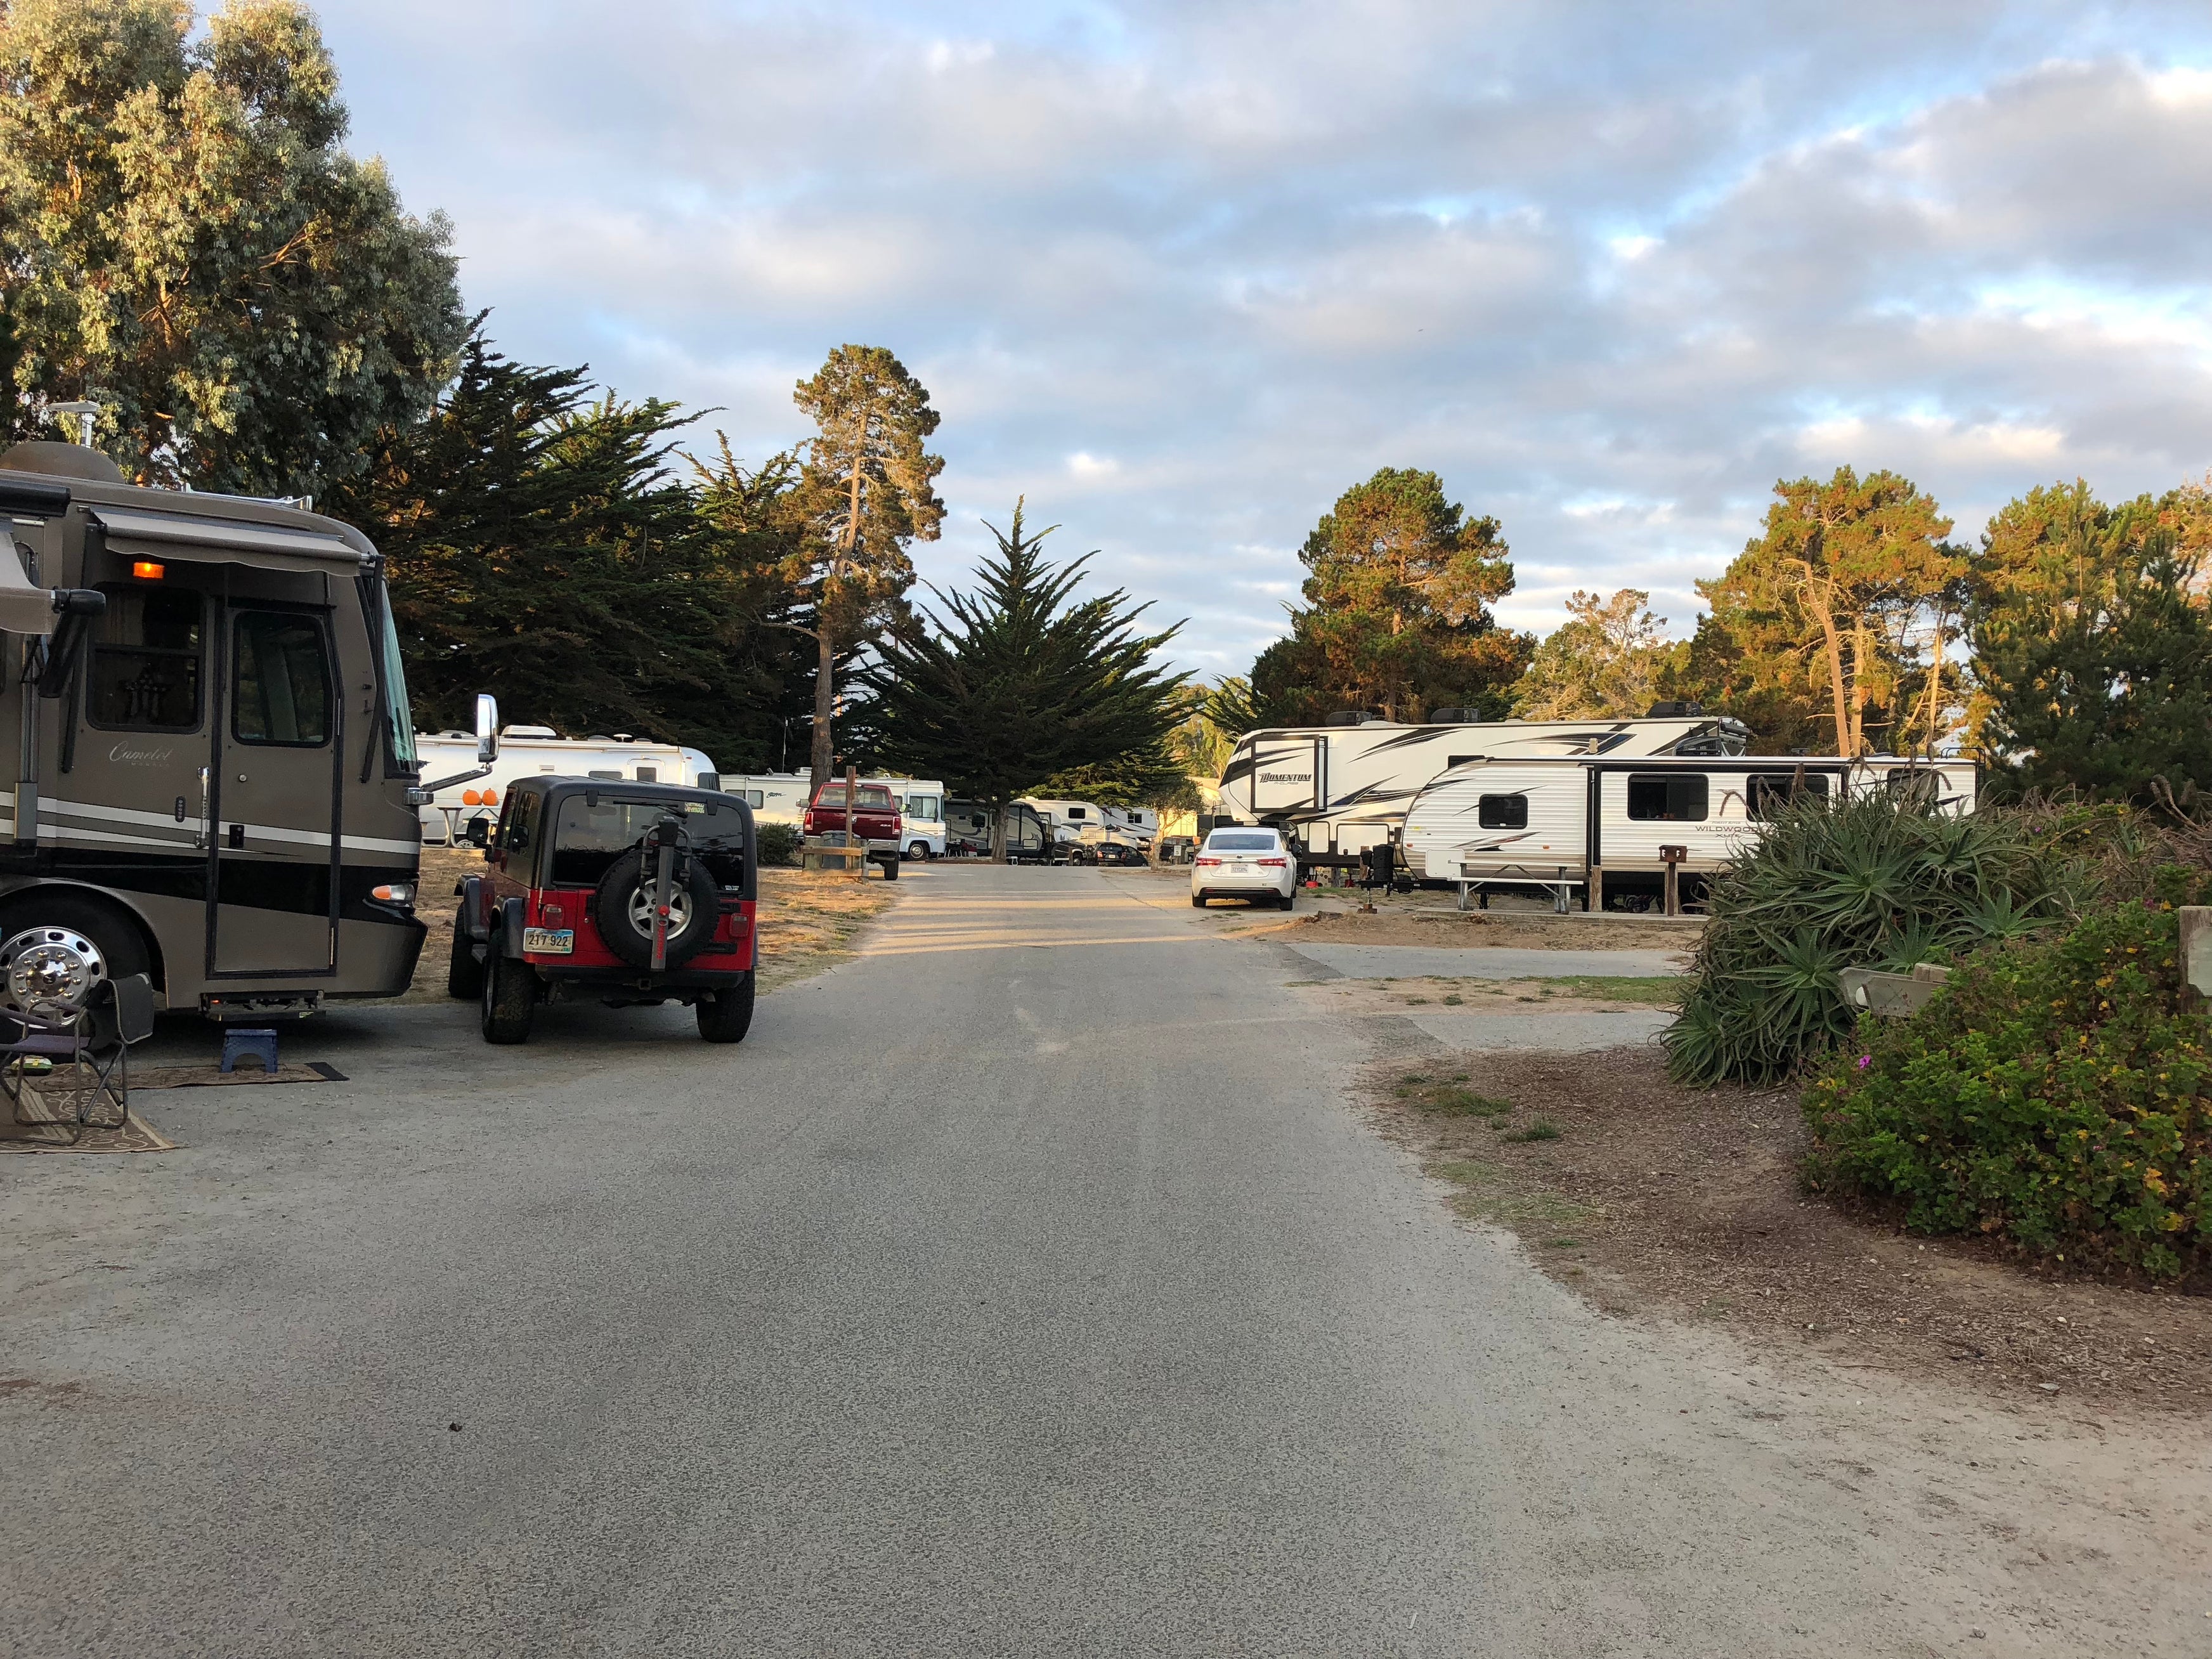 Monterey Pines RV Park - Military | The Dyrt